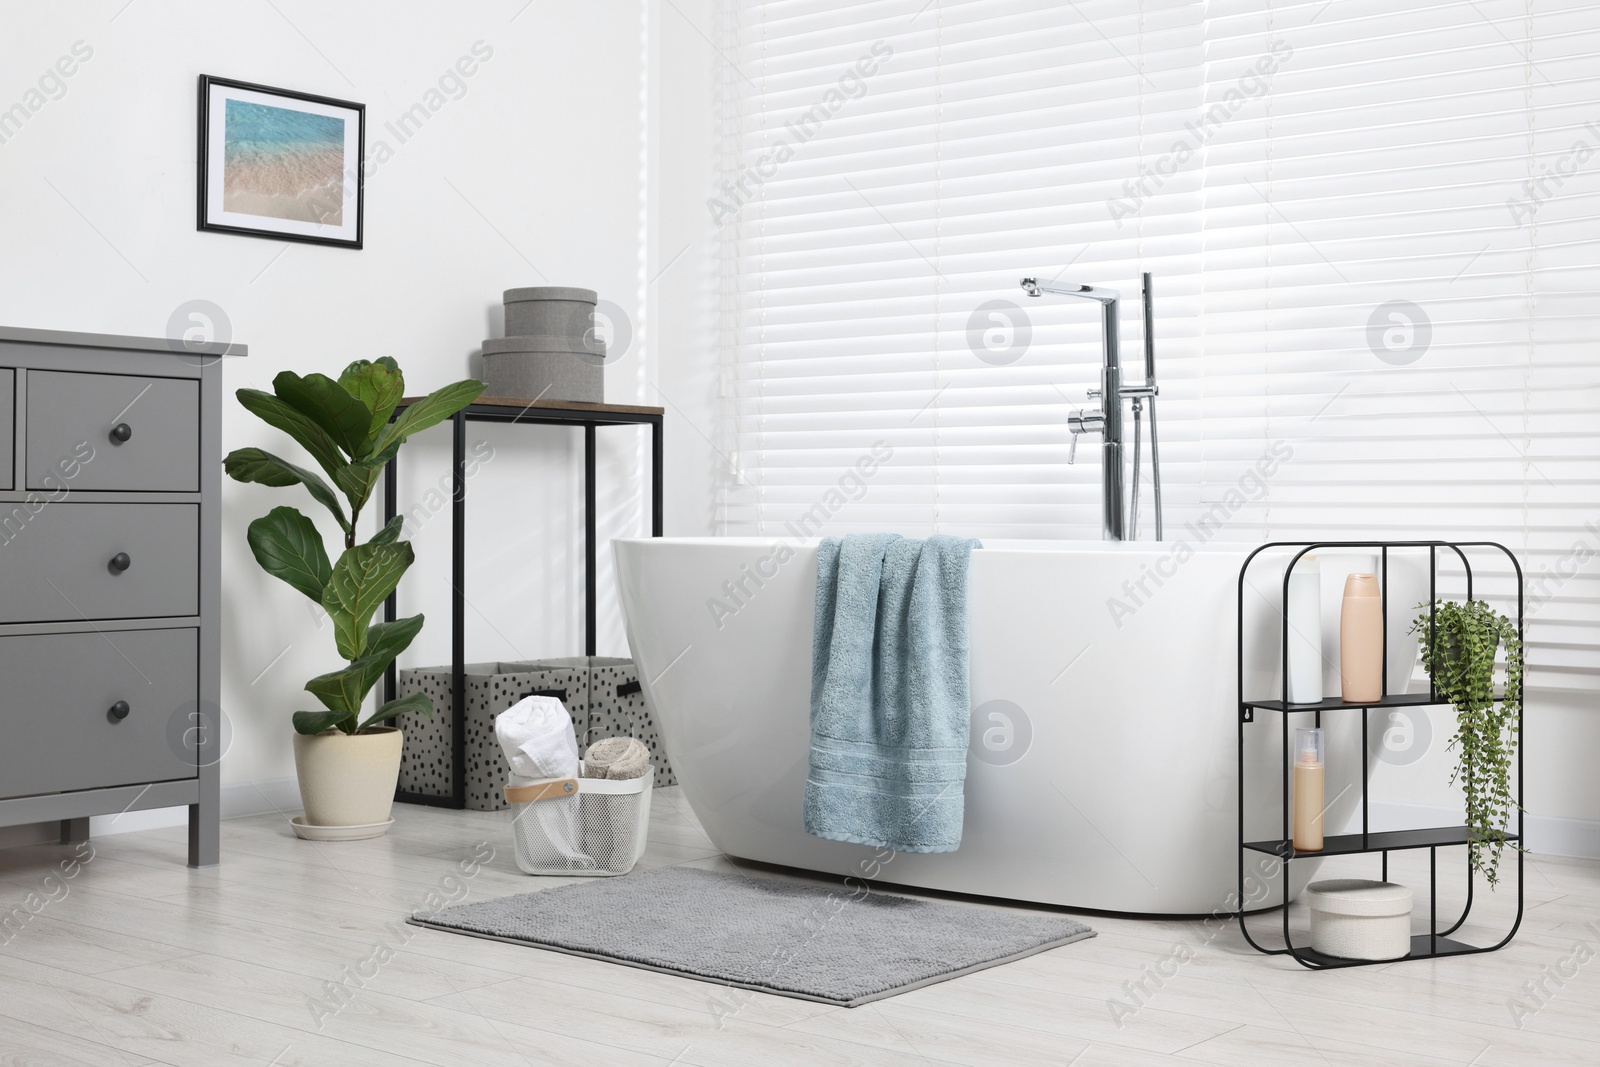 Photo of Stylish bathroom interior with bath tub, houseplants and soft light grey mat